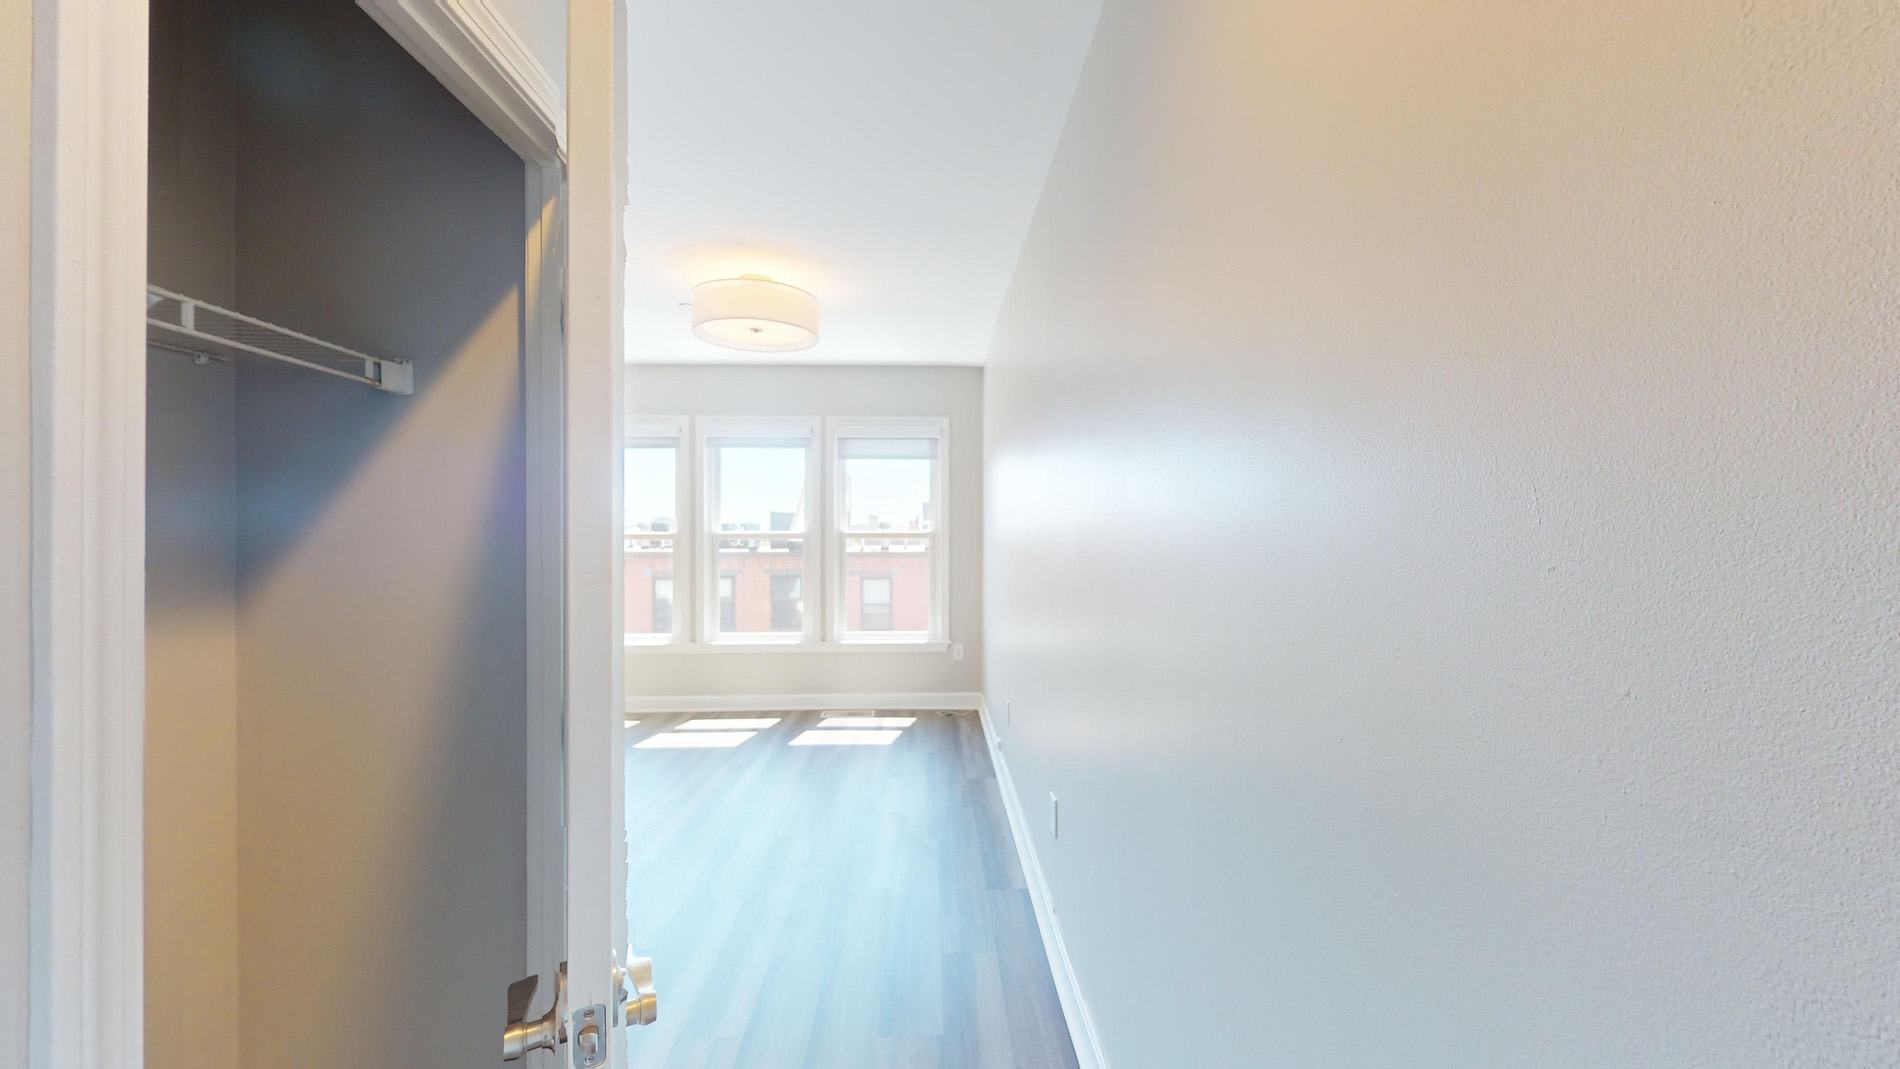 Photos of apartment on Newbury St.,Boston MA 02116